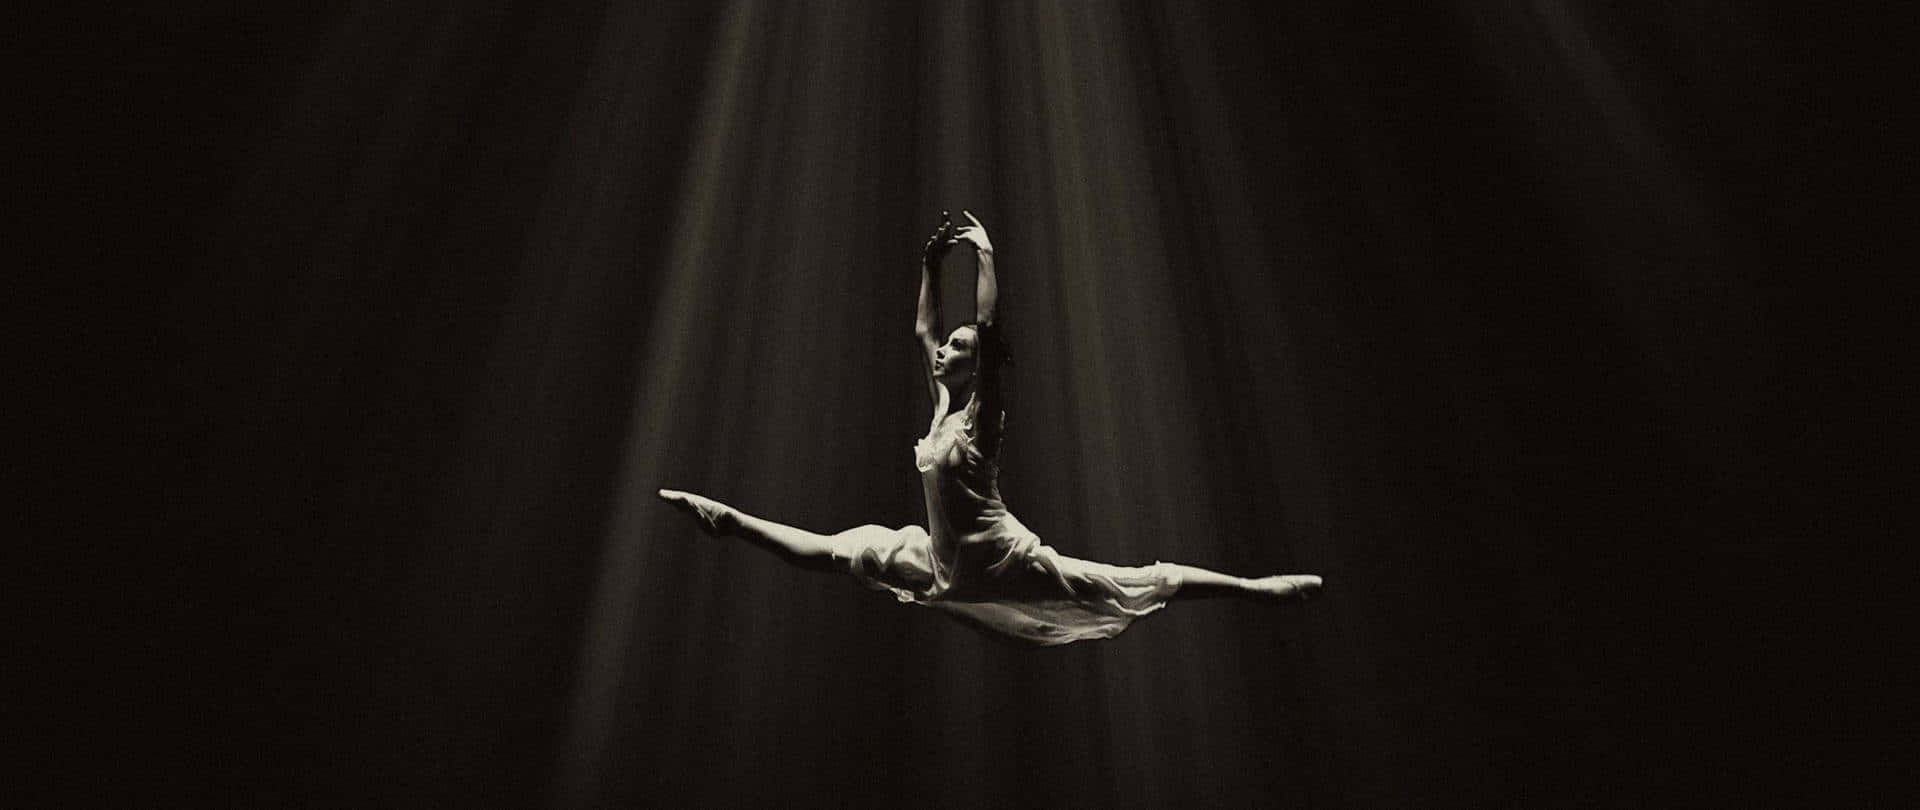 Ballerinadancer Mid Air Leap Photography - Ballerinadansös I Luften - Fotografi. Wallpaper